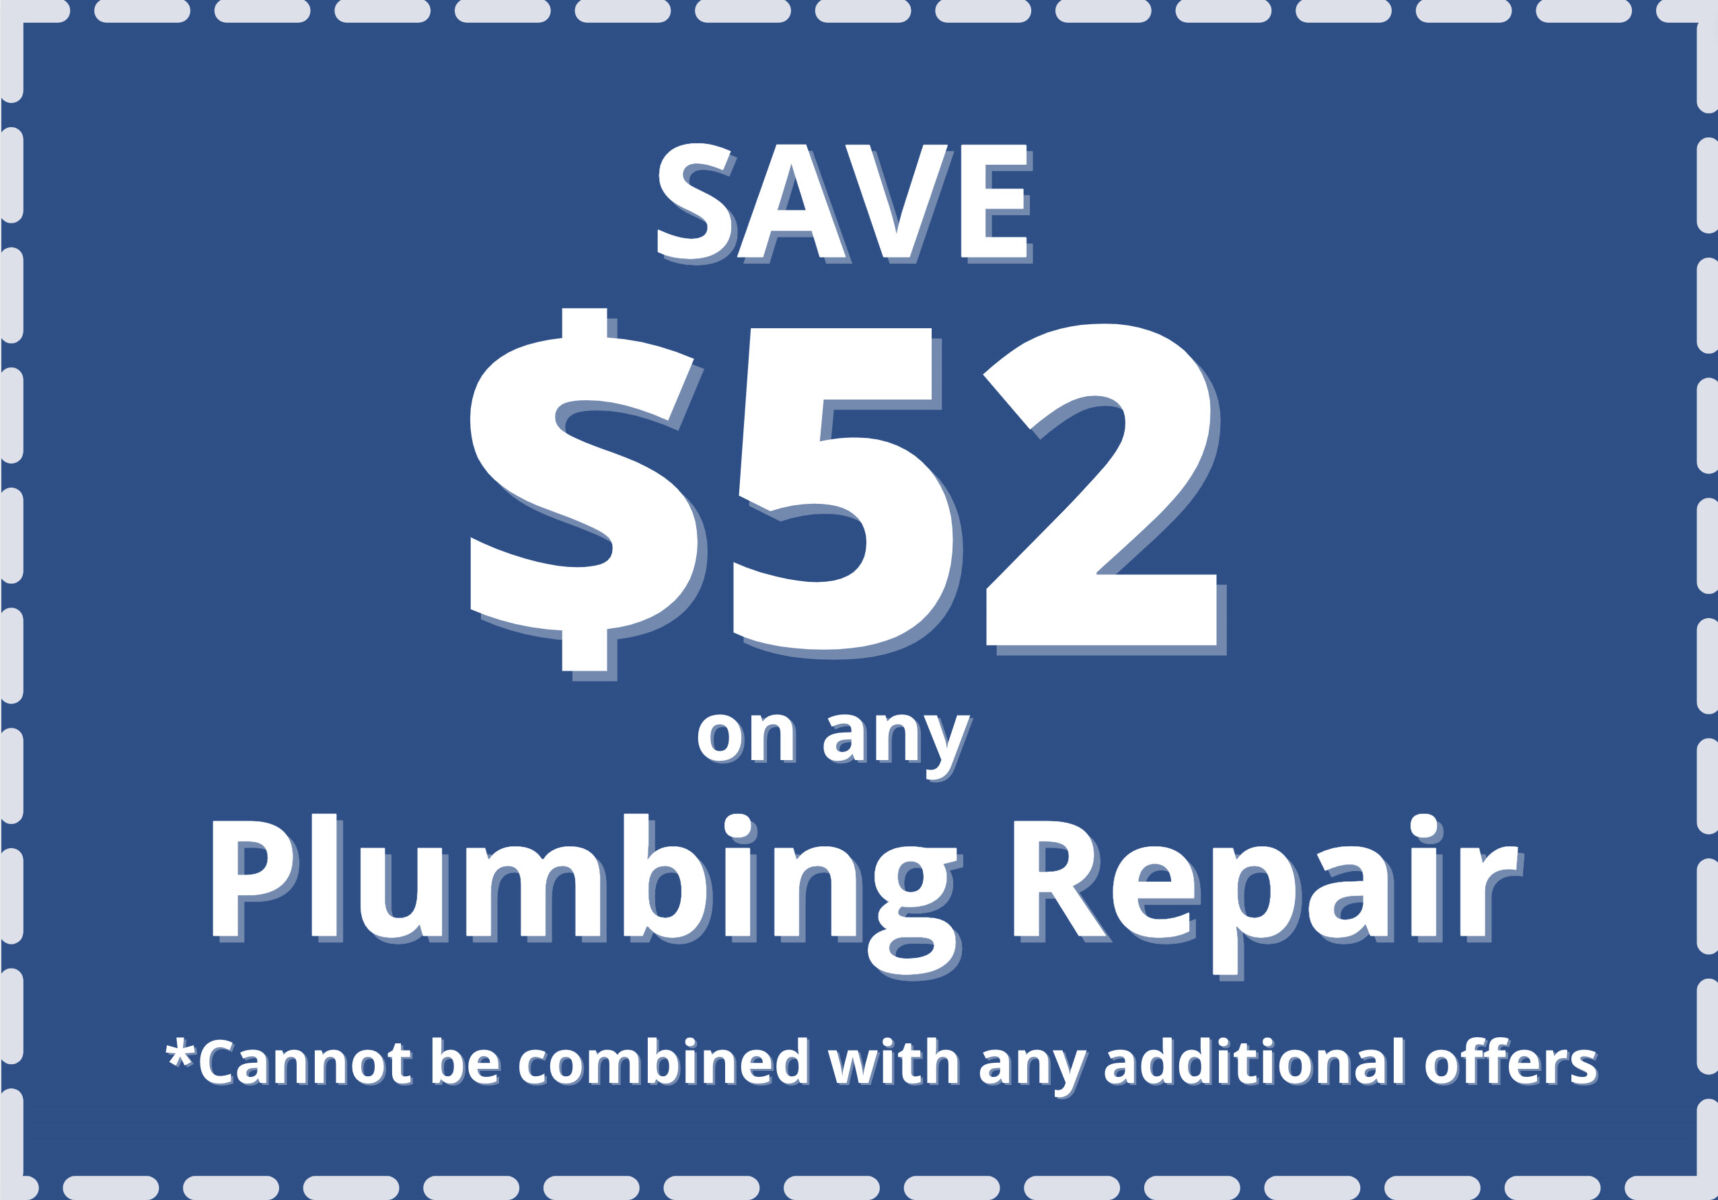 Save $52 on any Plumbing Repair